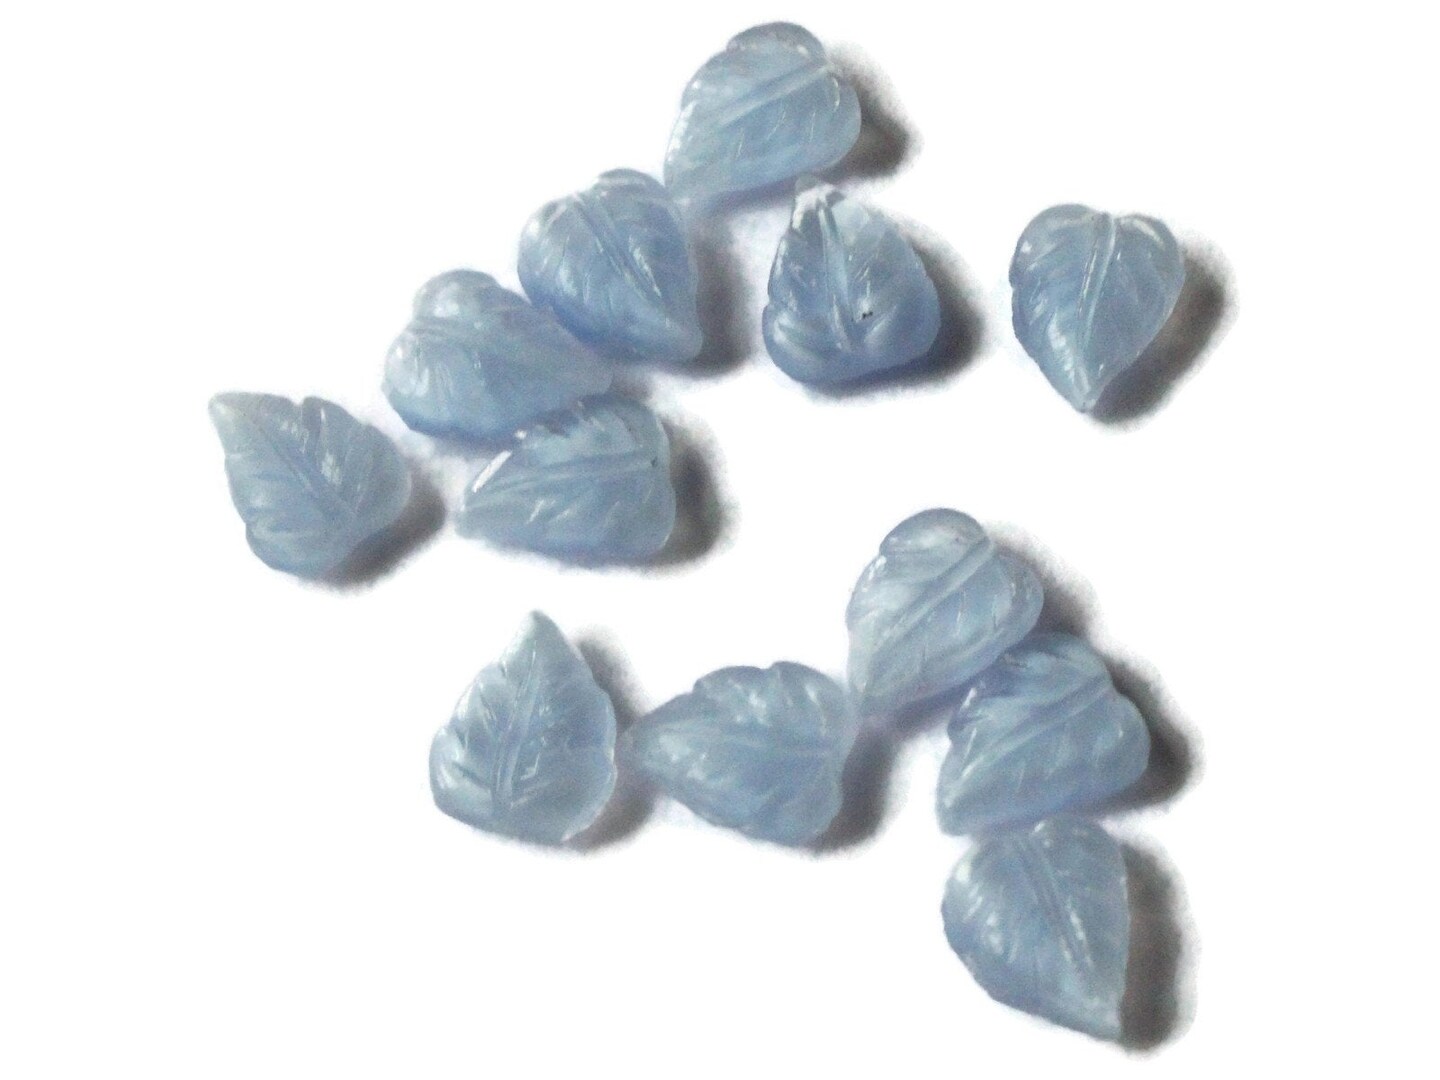 12 8mm x 6mm Blue Moonstone Leaf Cabochons - Tiny Little Leaves - Vintage Czech Glass Cabochons